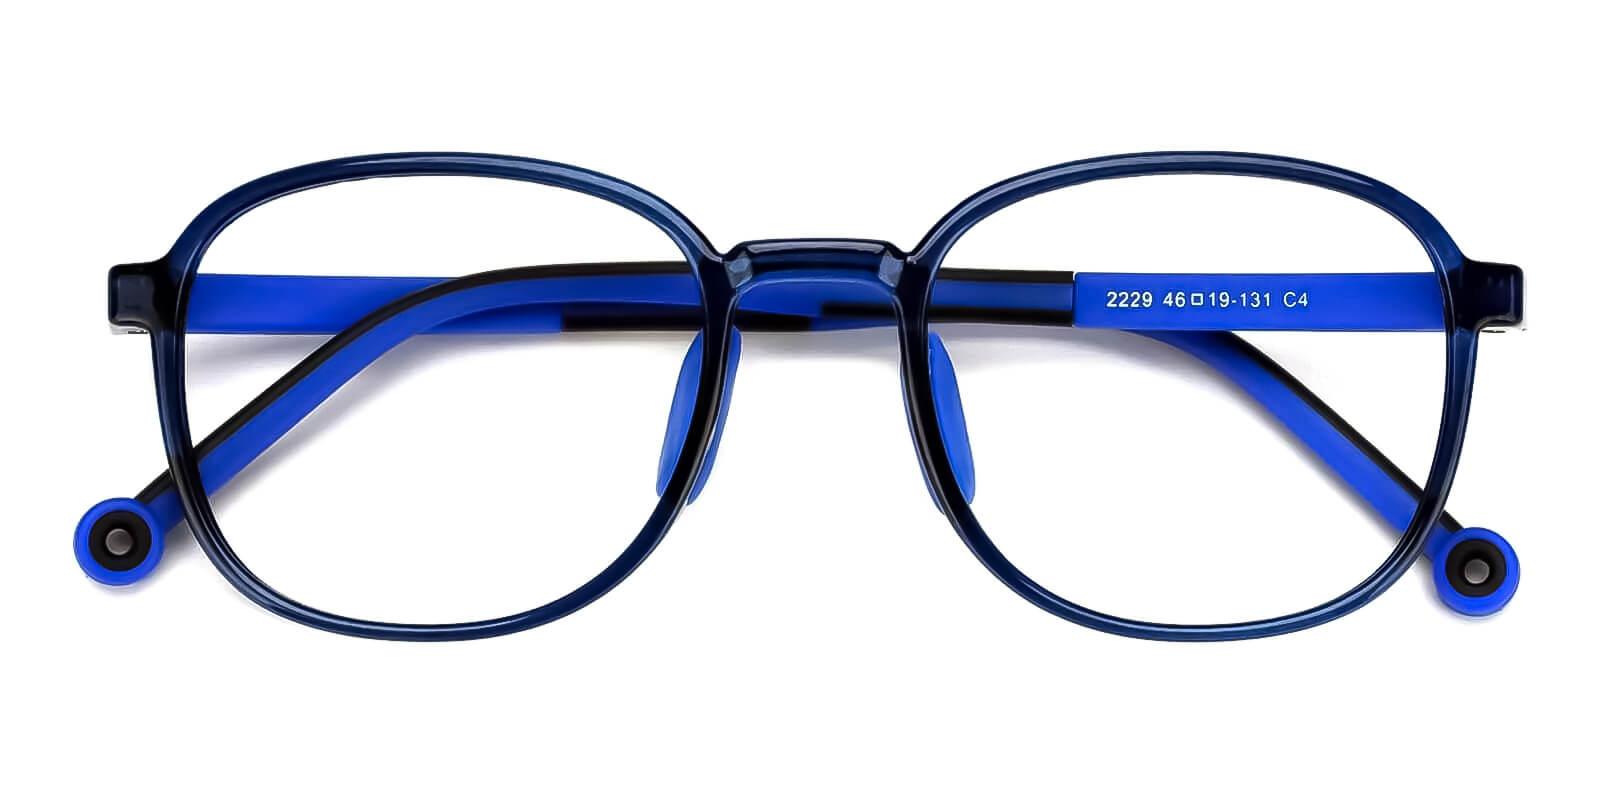 Kids-Astute Blue TR Eyeglasses , Fashion , UniversalBridgeFit Frames from ABBE Glasses